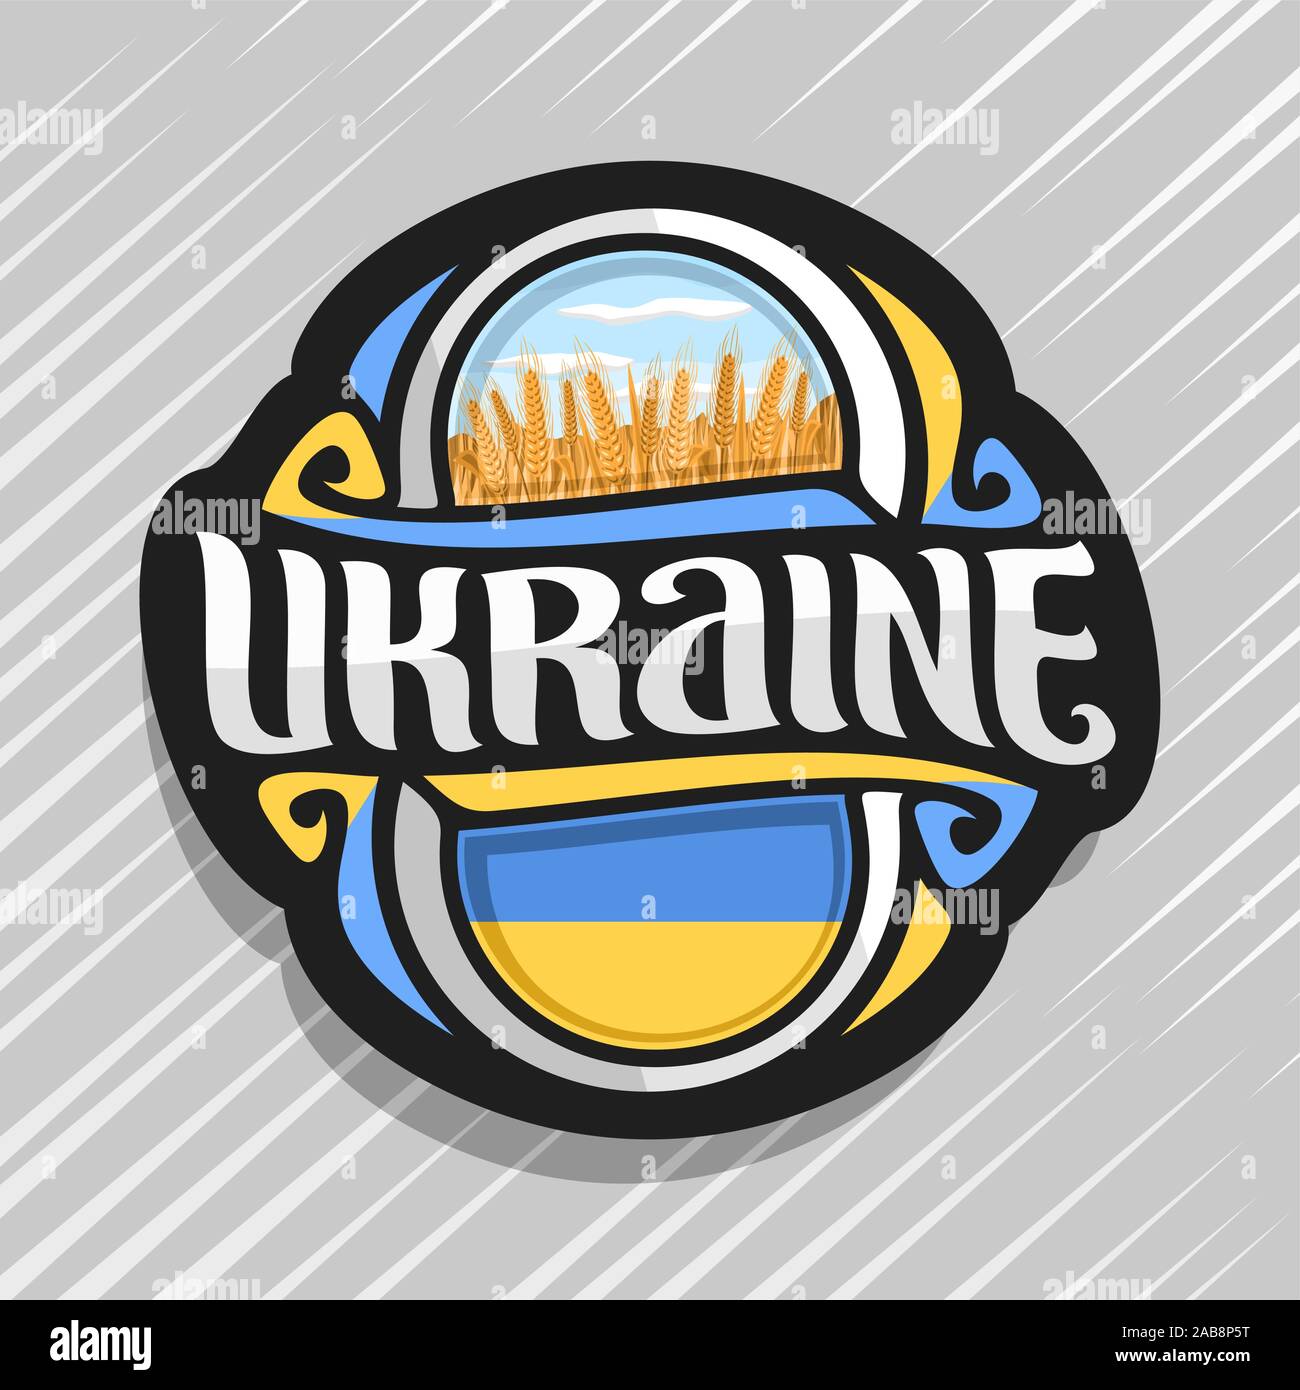 Vector logo for Ukraine country, fridge magnet with ukrainian flag, original brush typeface for word ukraine and ukrainian symbols - blue cloudy sky a Stock Vector